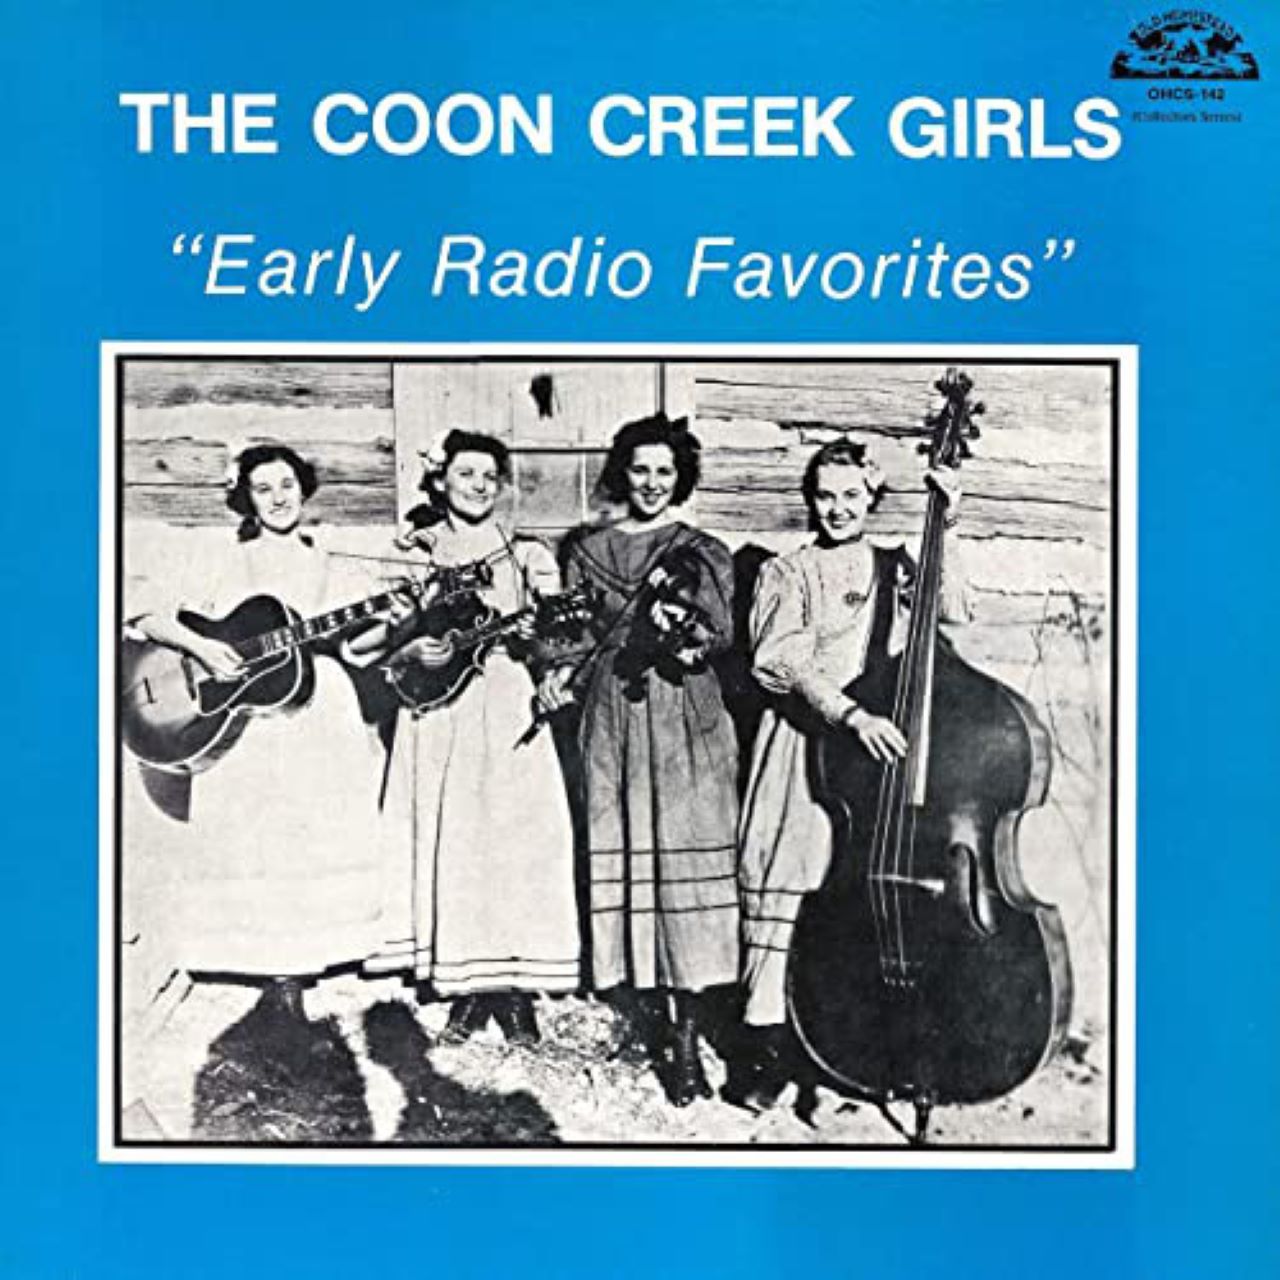 Coon Creek Girls - Early Radio Favorites cover album